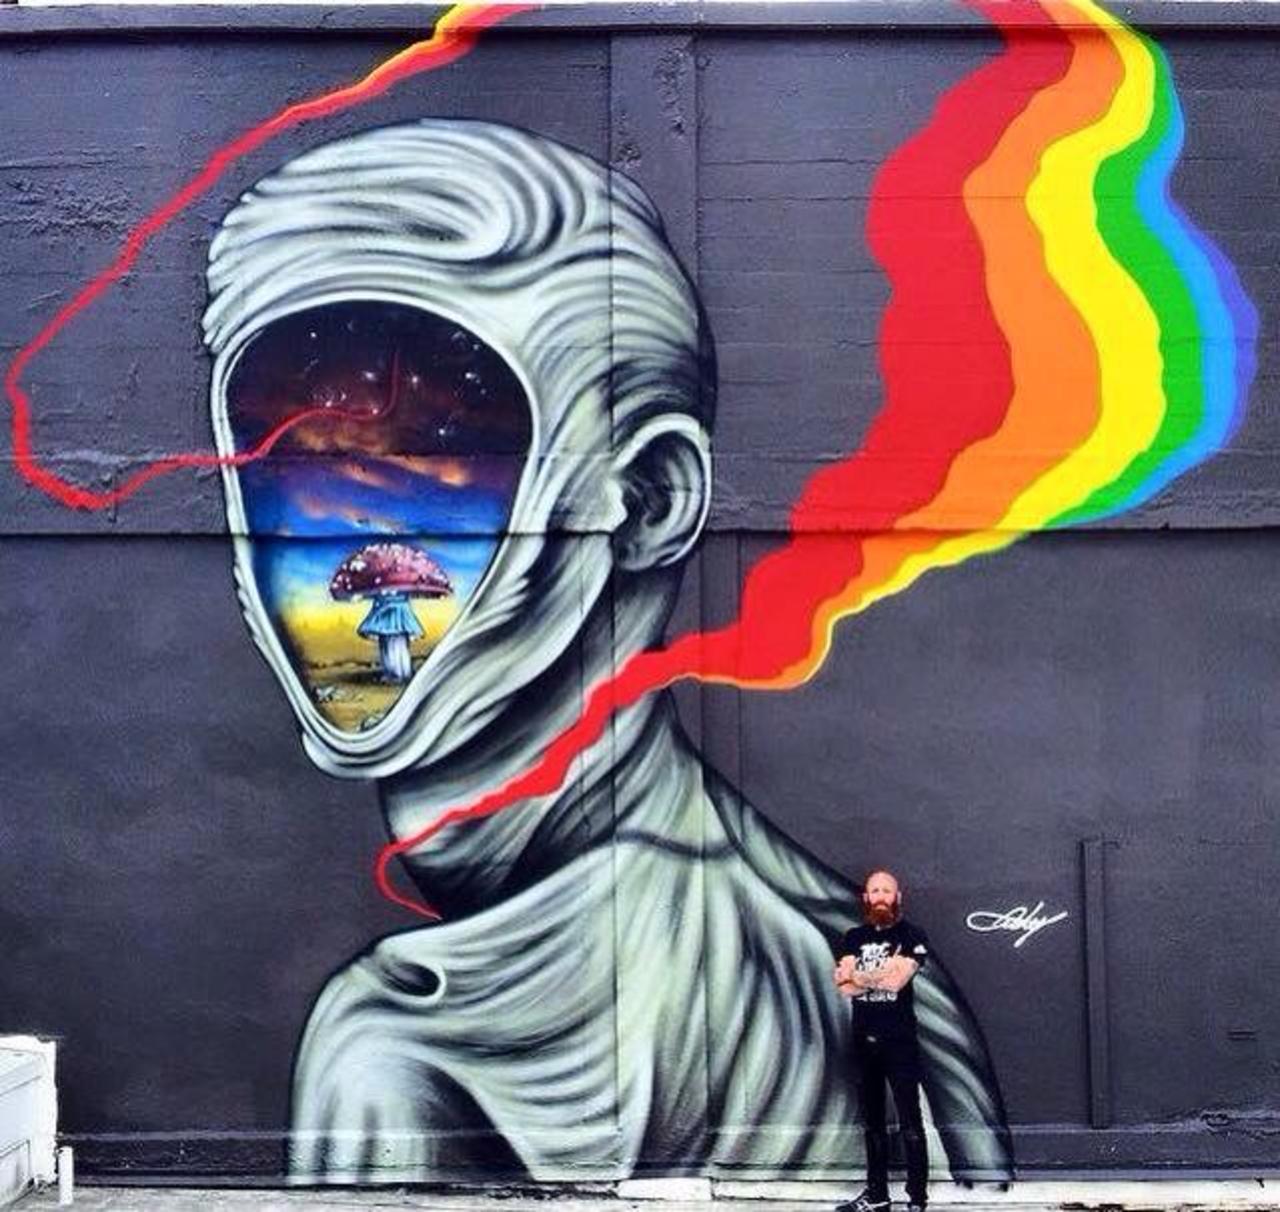 Street Art by Ernest Doty in Oakland CA

#art #arte #graffiti #streetart http://t.co/JLpCHEV3Wv